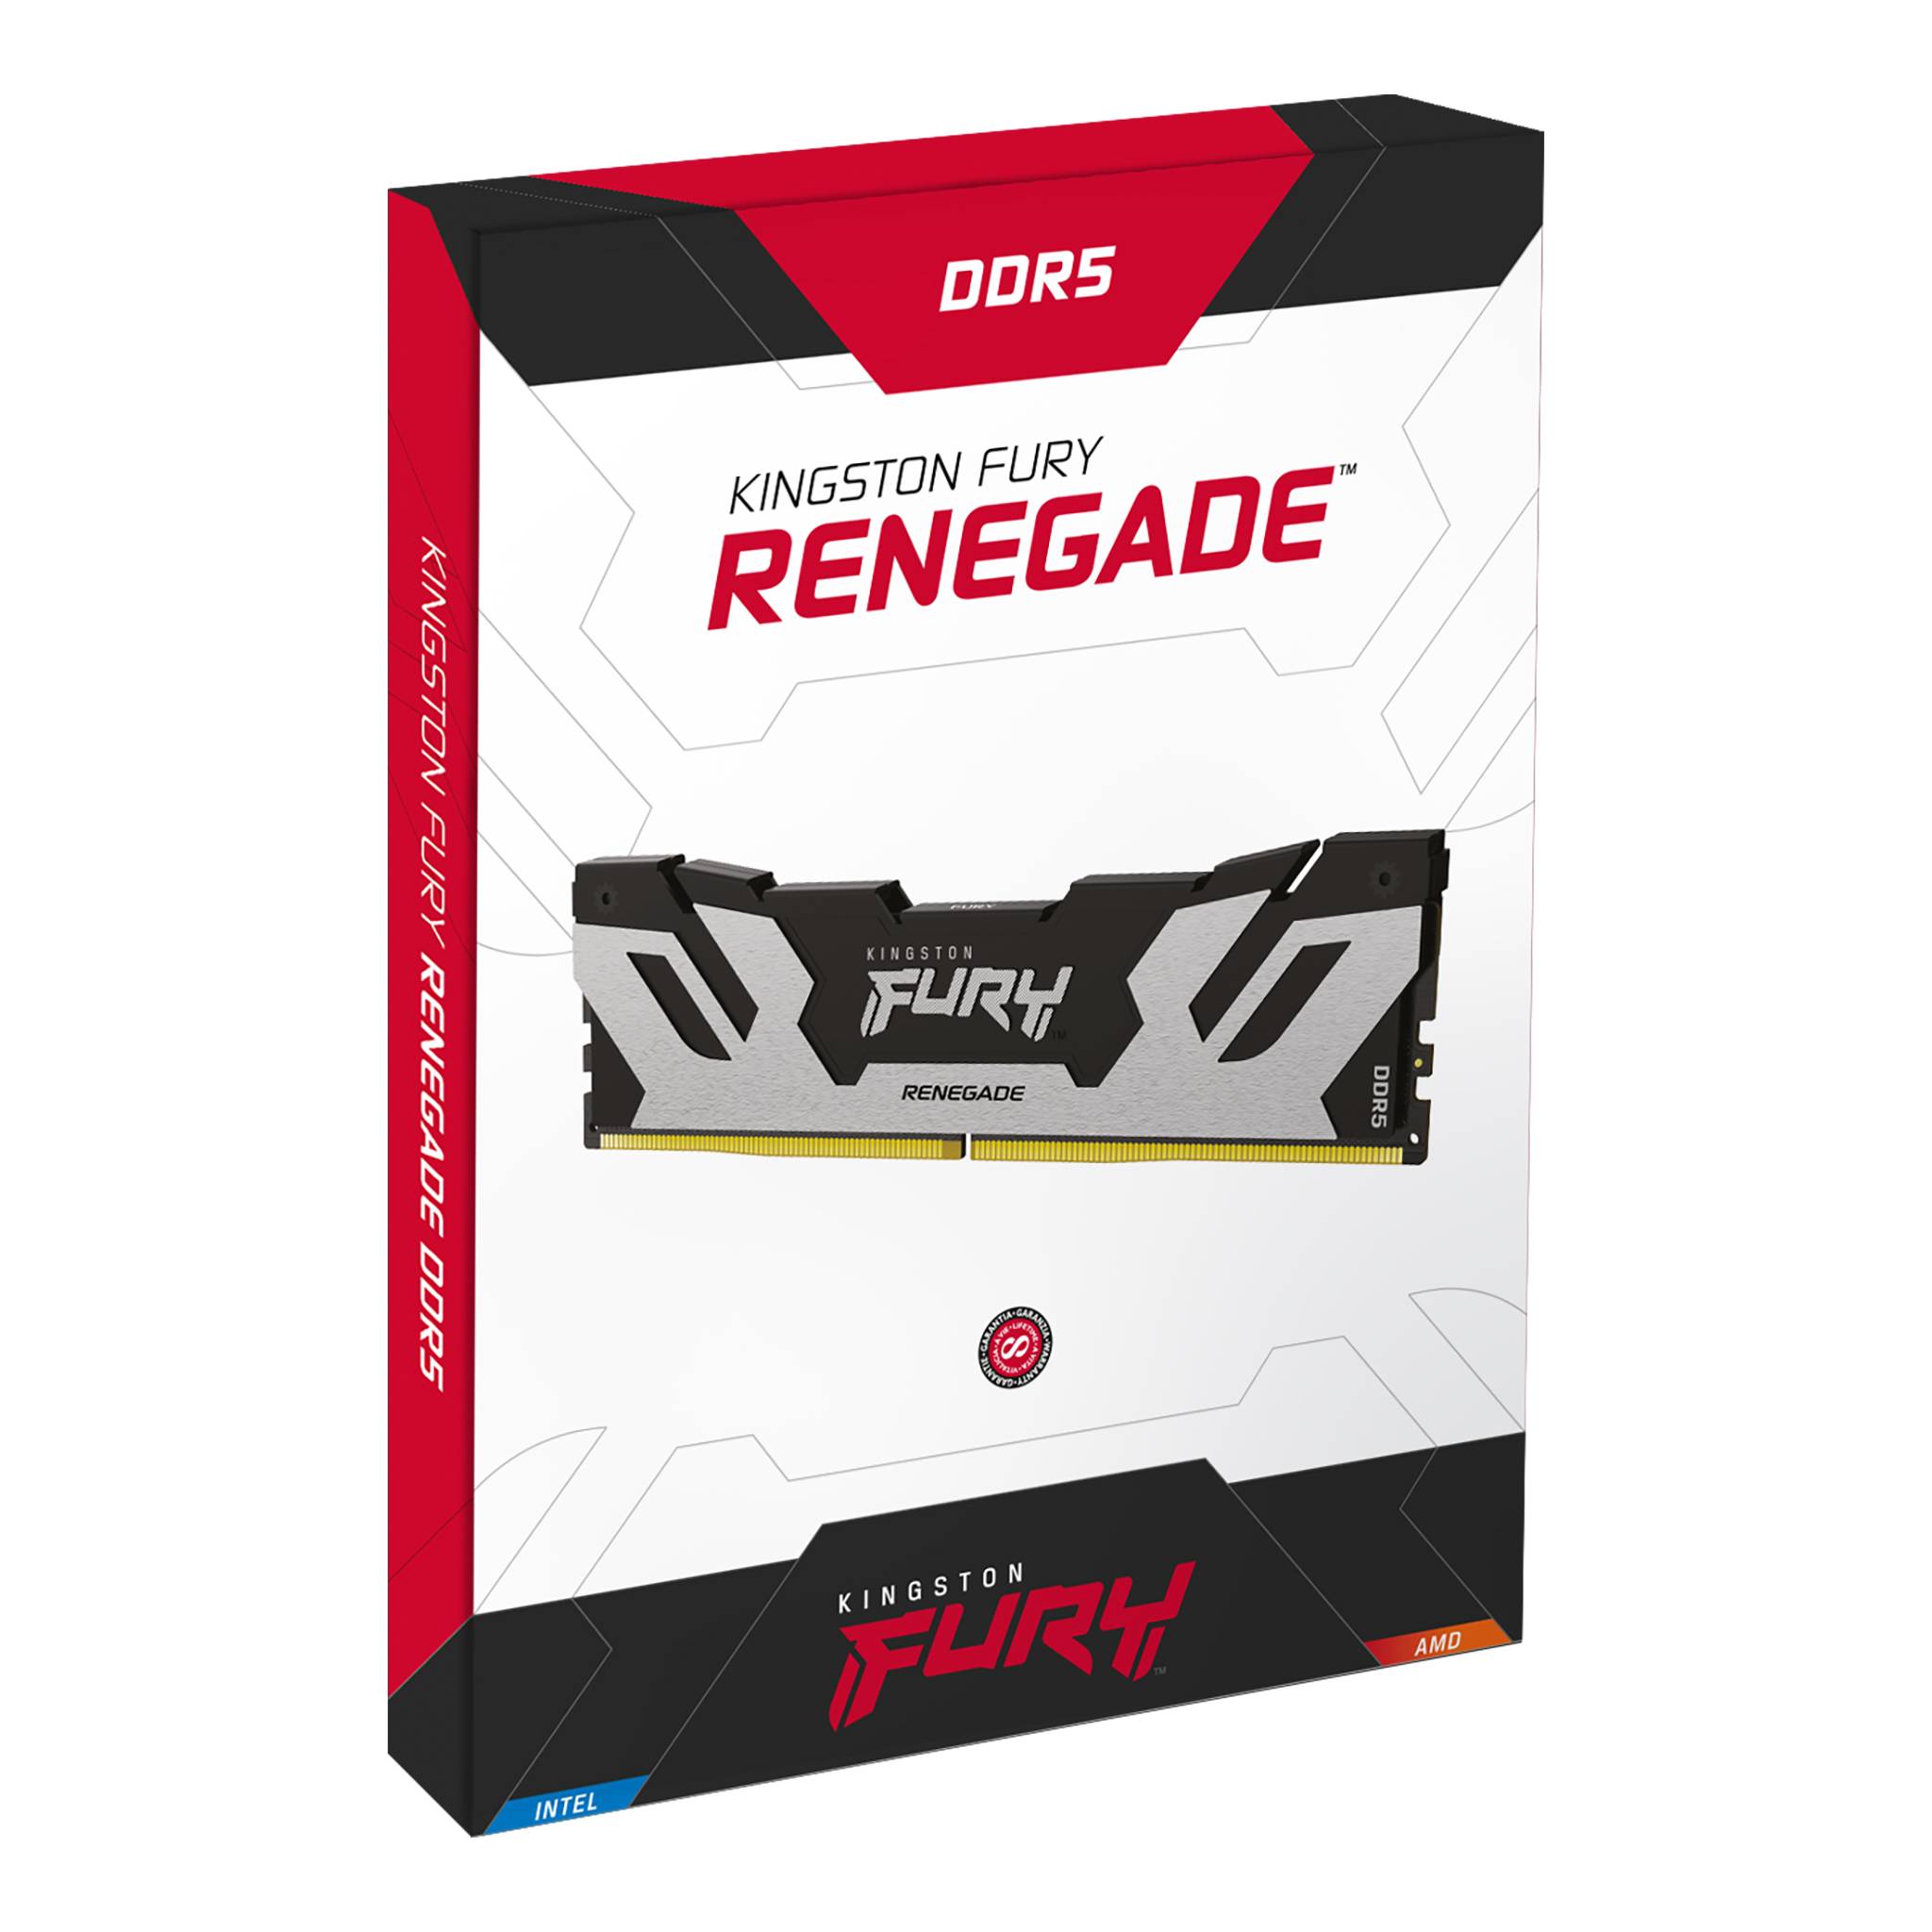 Kingston FURY™ Renegade DDR5 Memory - Kingston Technology